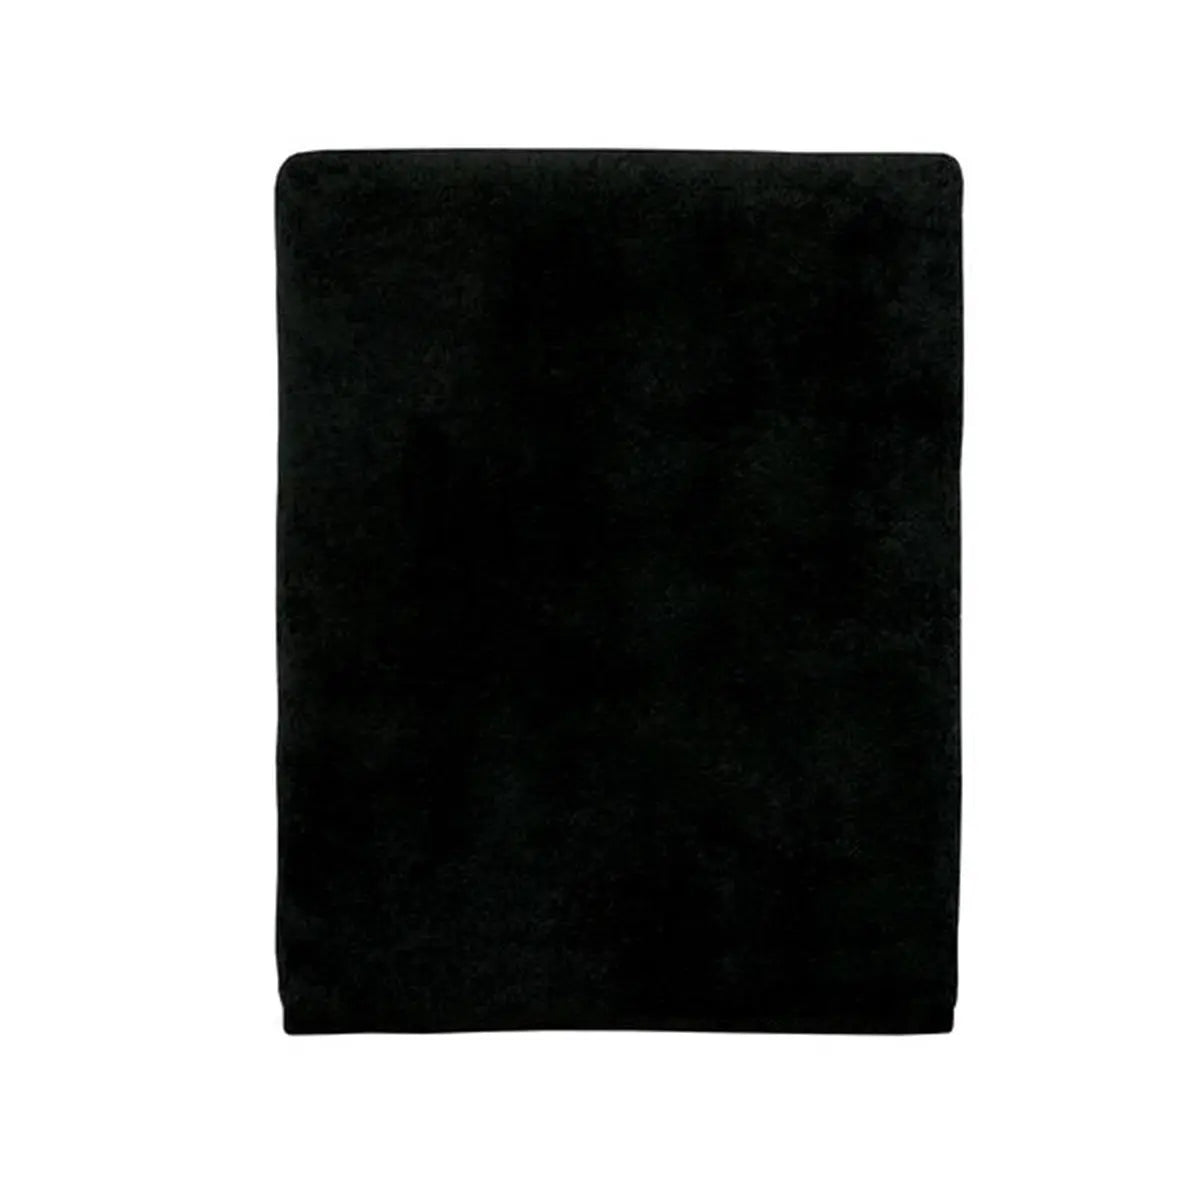 Sferra Sarma Bath Towel in Black